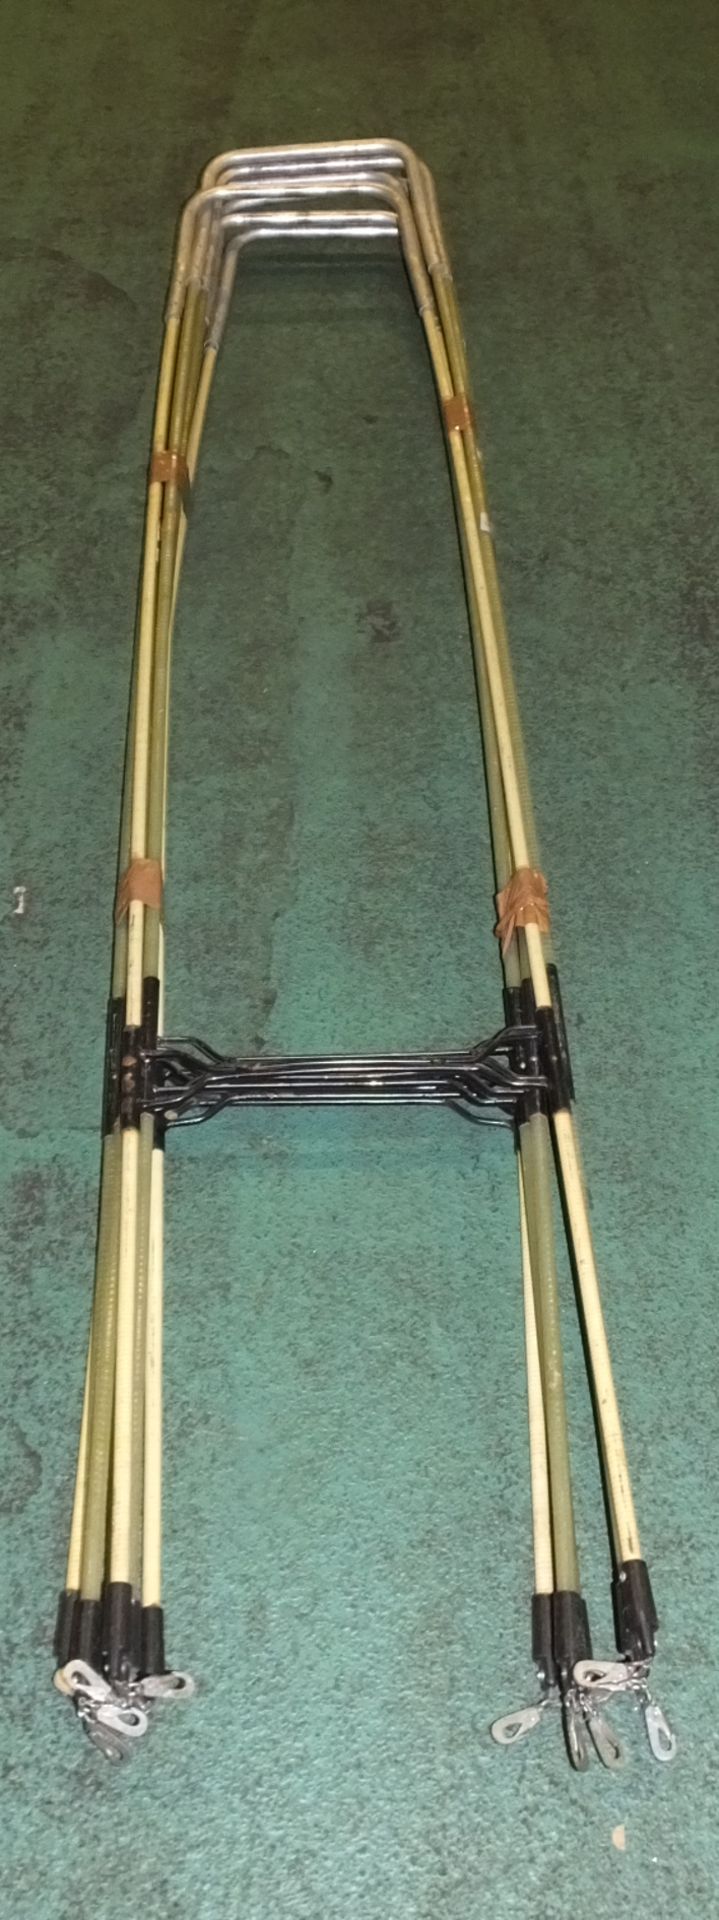 7x pull sled harnesses